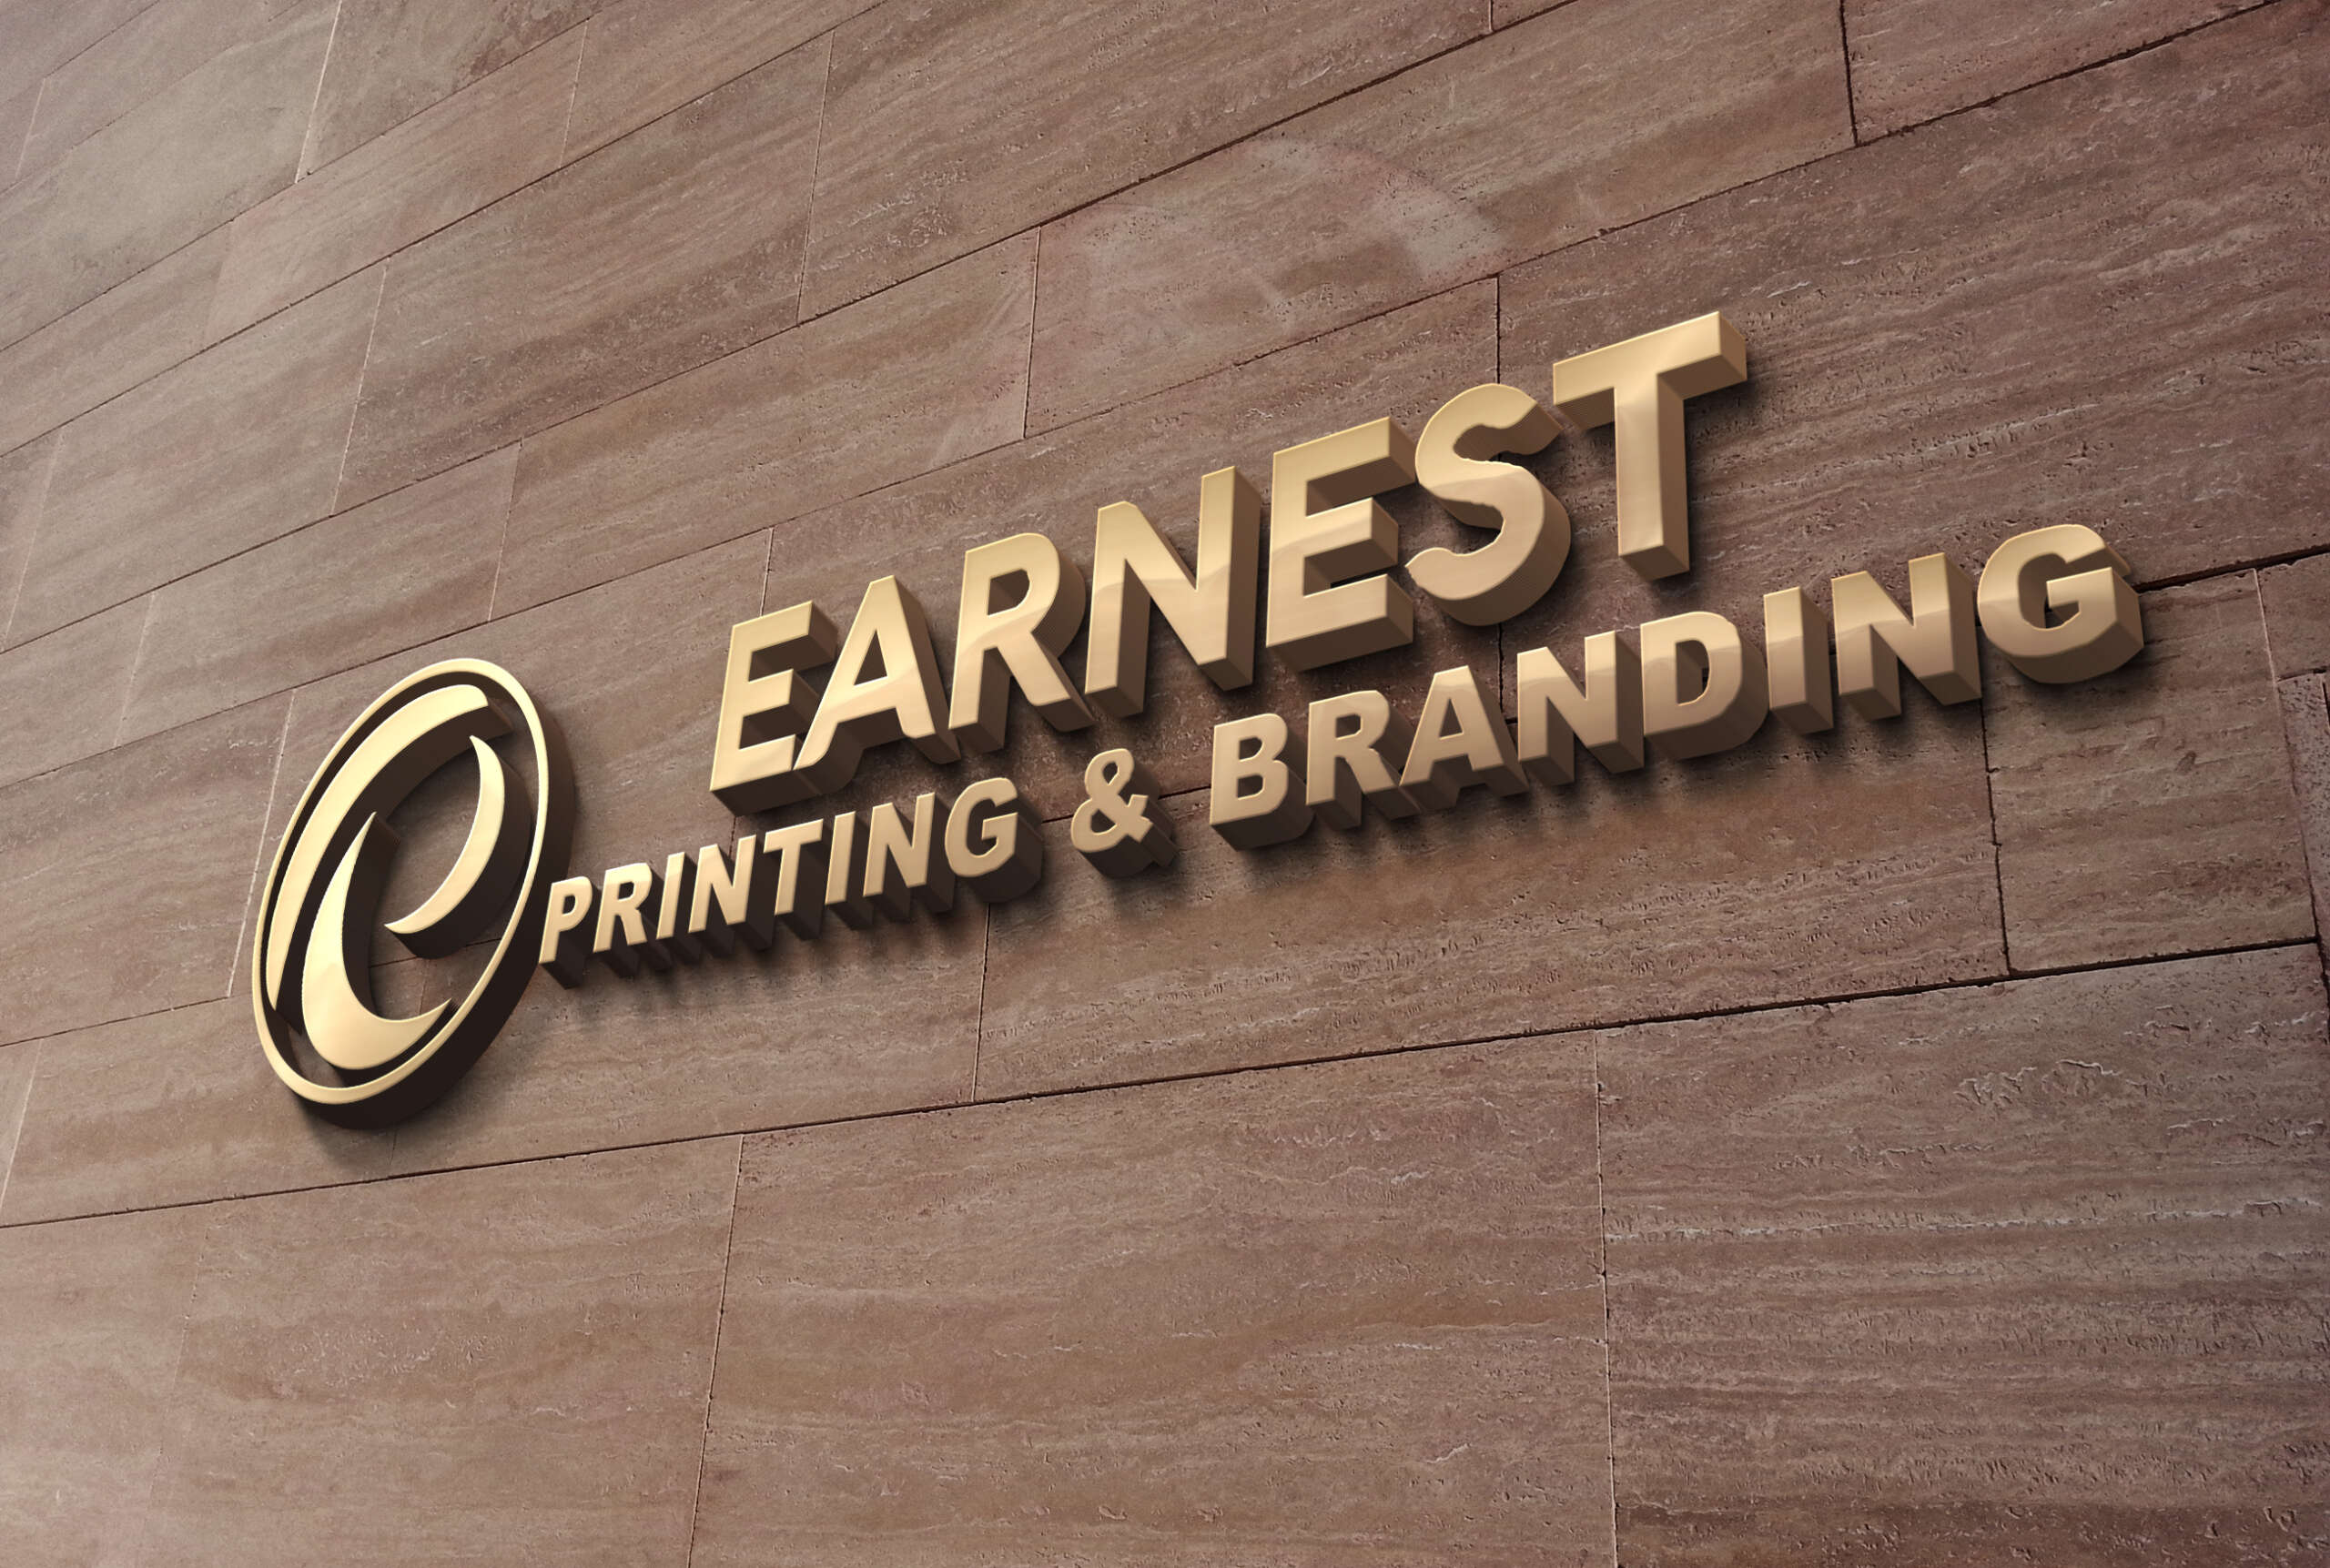 The best printing and branding company in Botswana